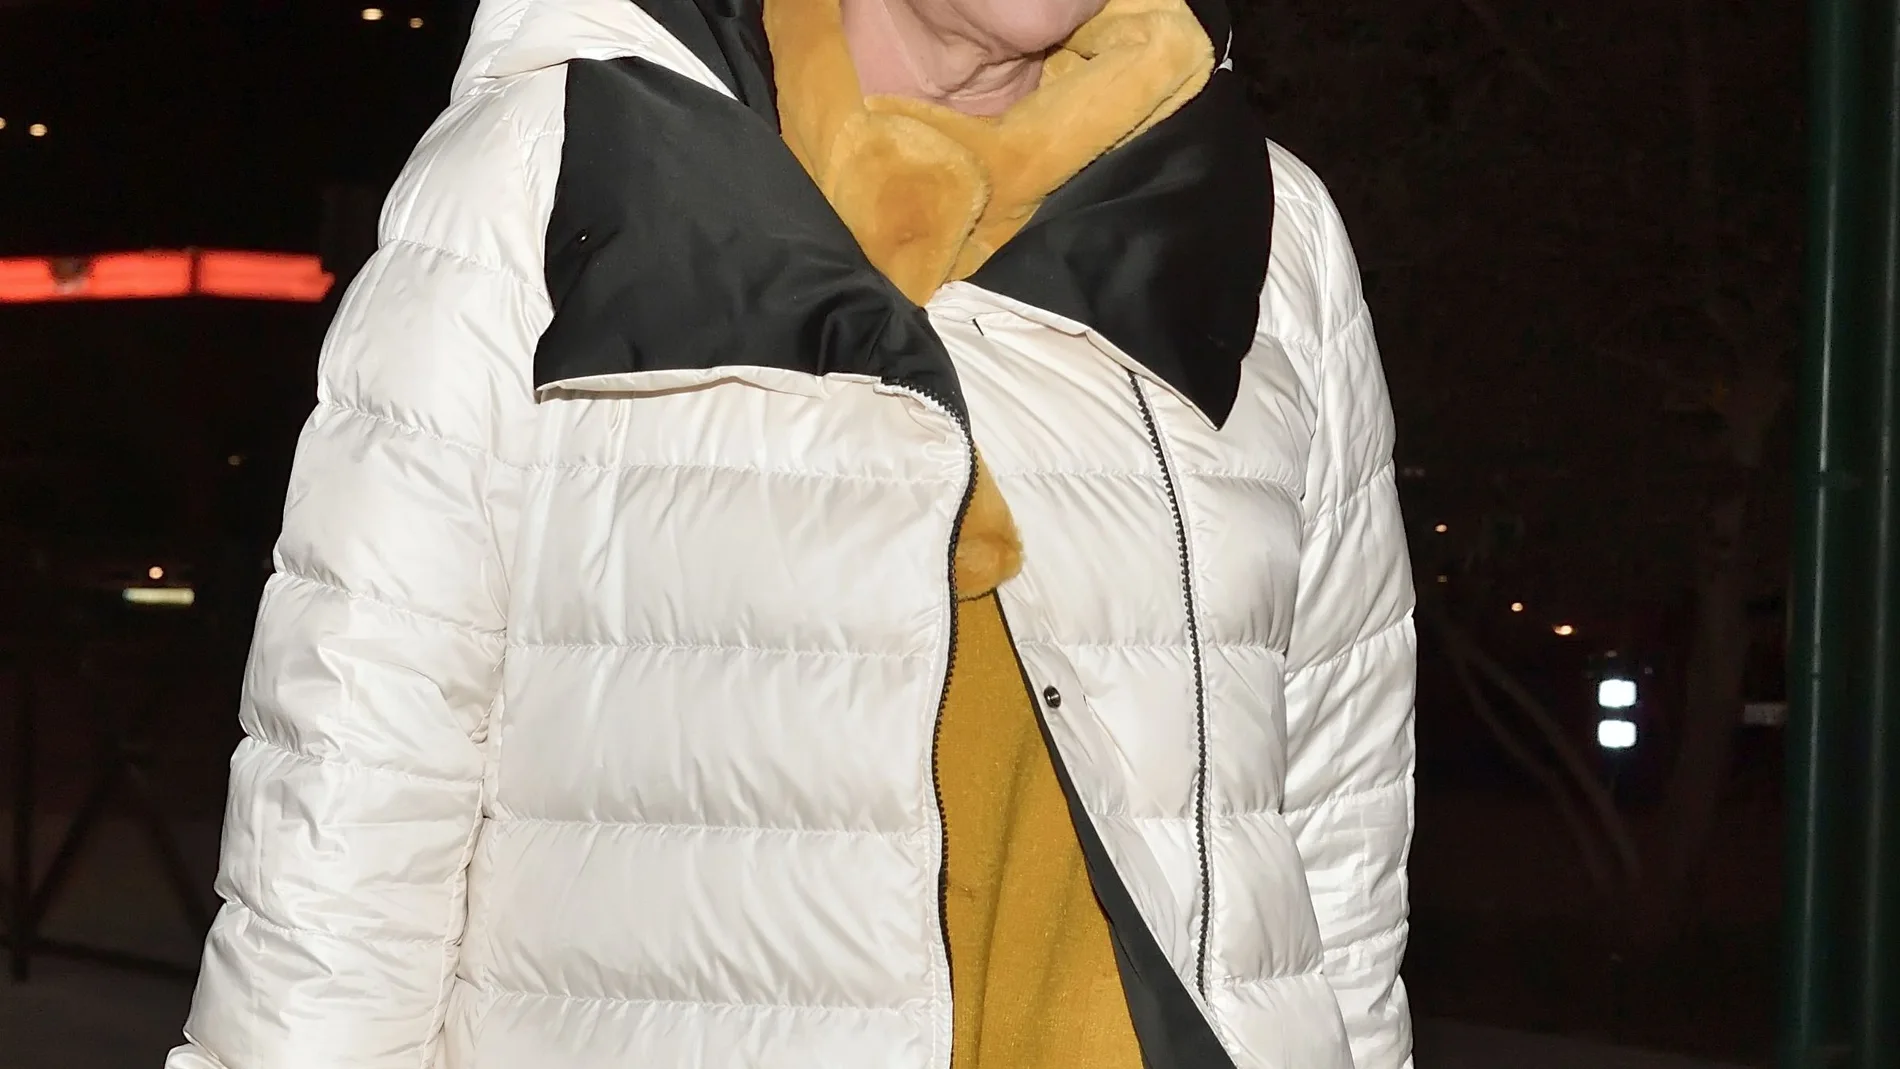 Singer Isabel Pantoja in Jerez on Tuesday 29 January, 2020